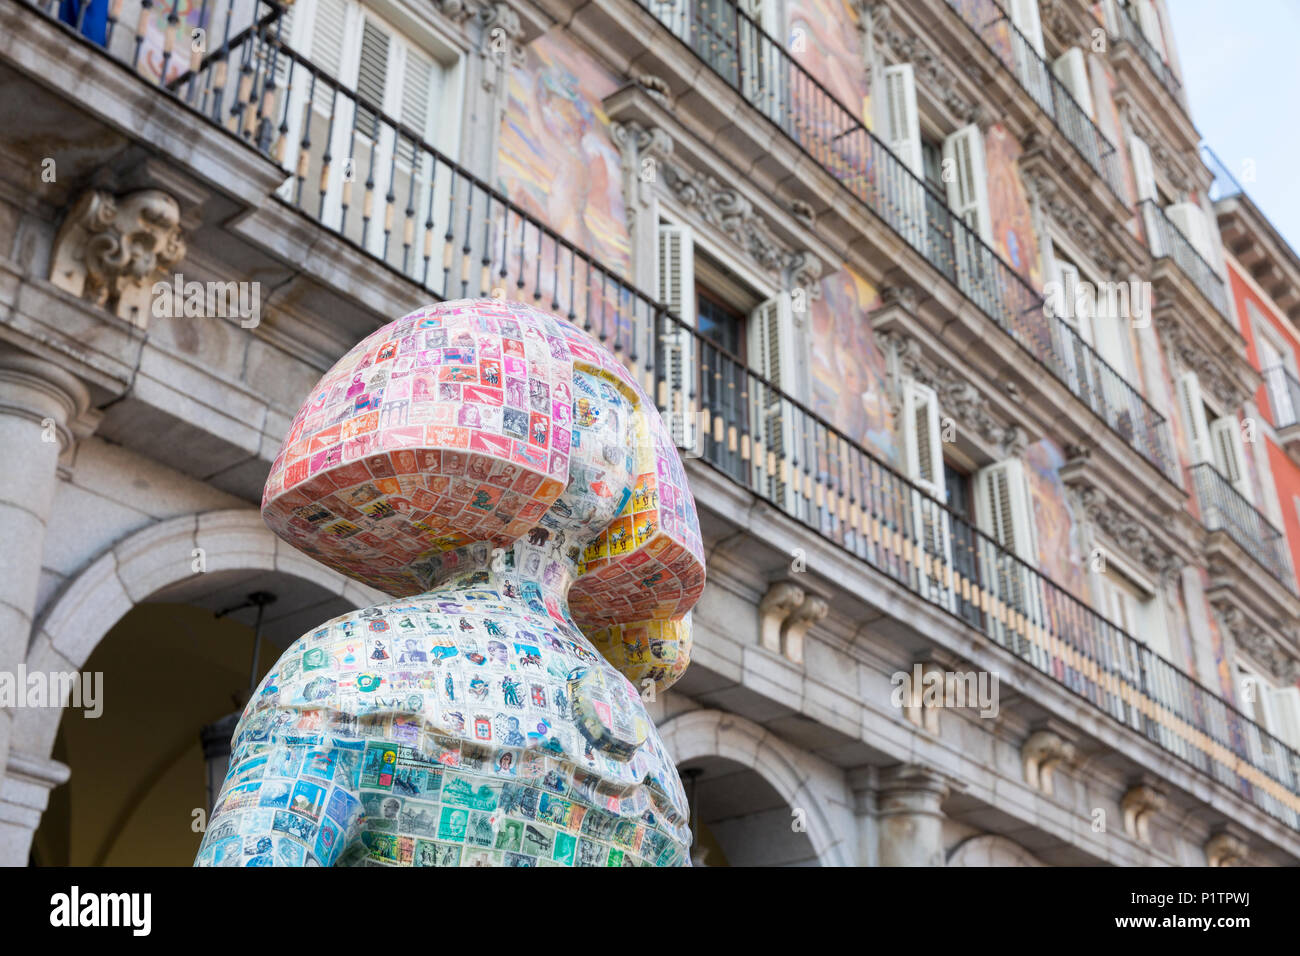 Madrid, Espagne : 'La Menina' Postal par l'artiste Luigi Rodríguez en face de Casa de la Panadería sur la Plaza Mayor. La sculpture fait partie de la 'eninas Banque D'Images